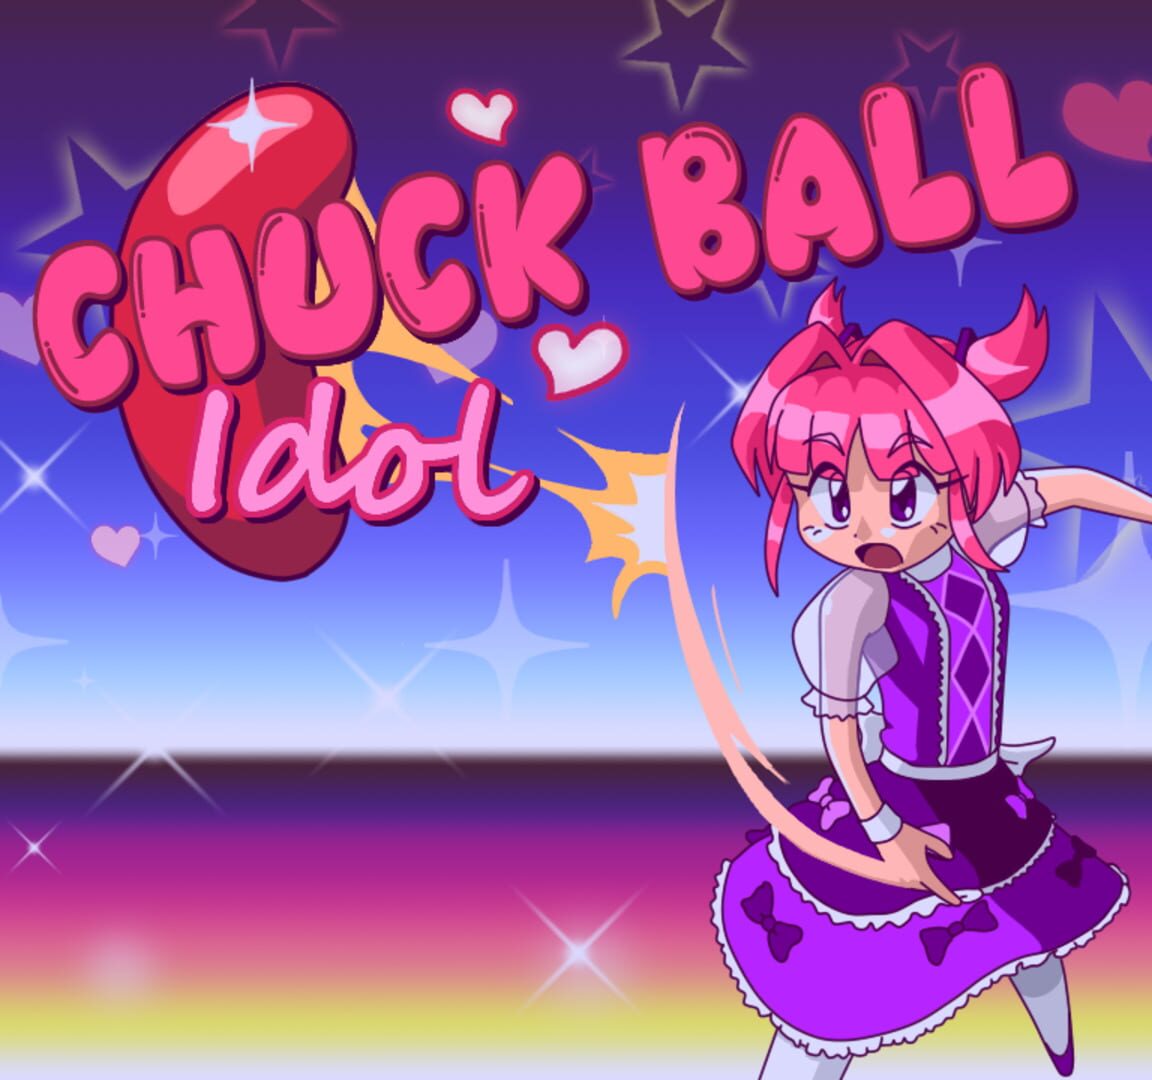 Chuck Ball Idol Image